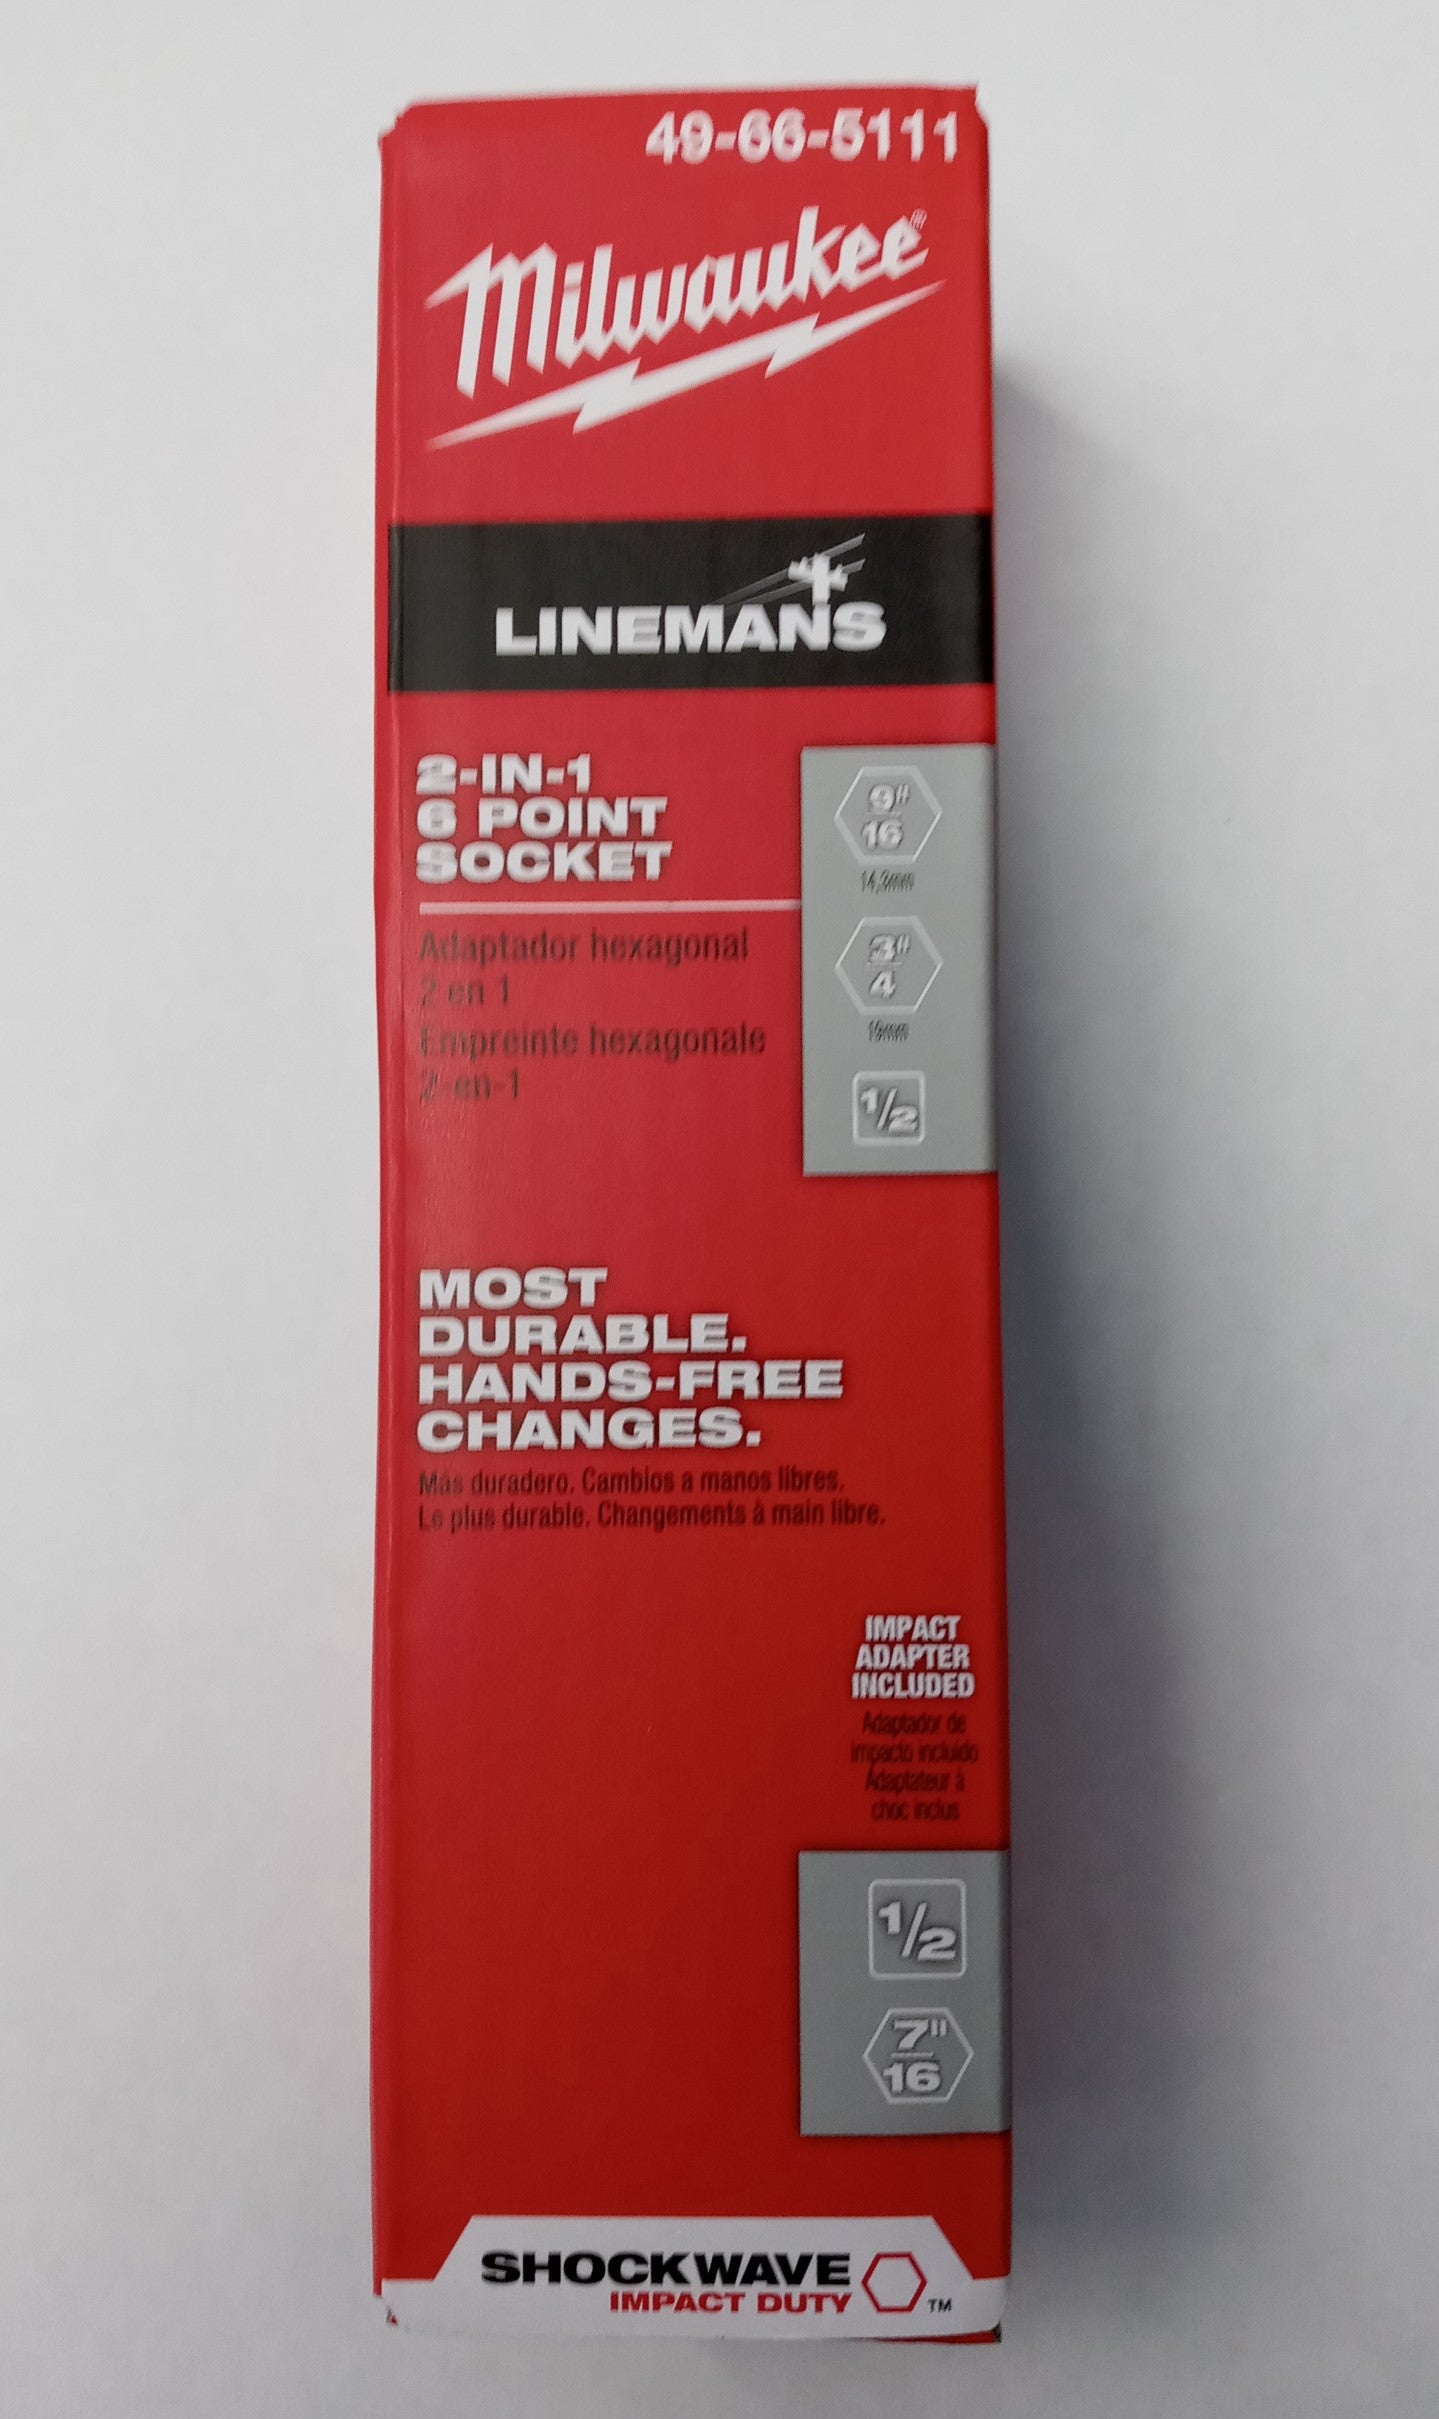 Milwaukee 49-66-5111 Shockwave Lineman's 6PT 9/16" x 3/4" 2-in-1 Socket